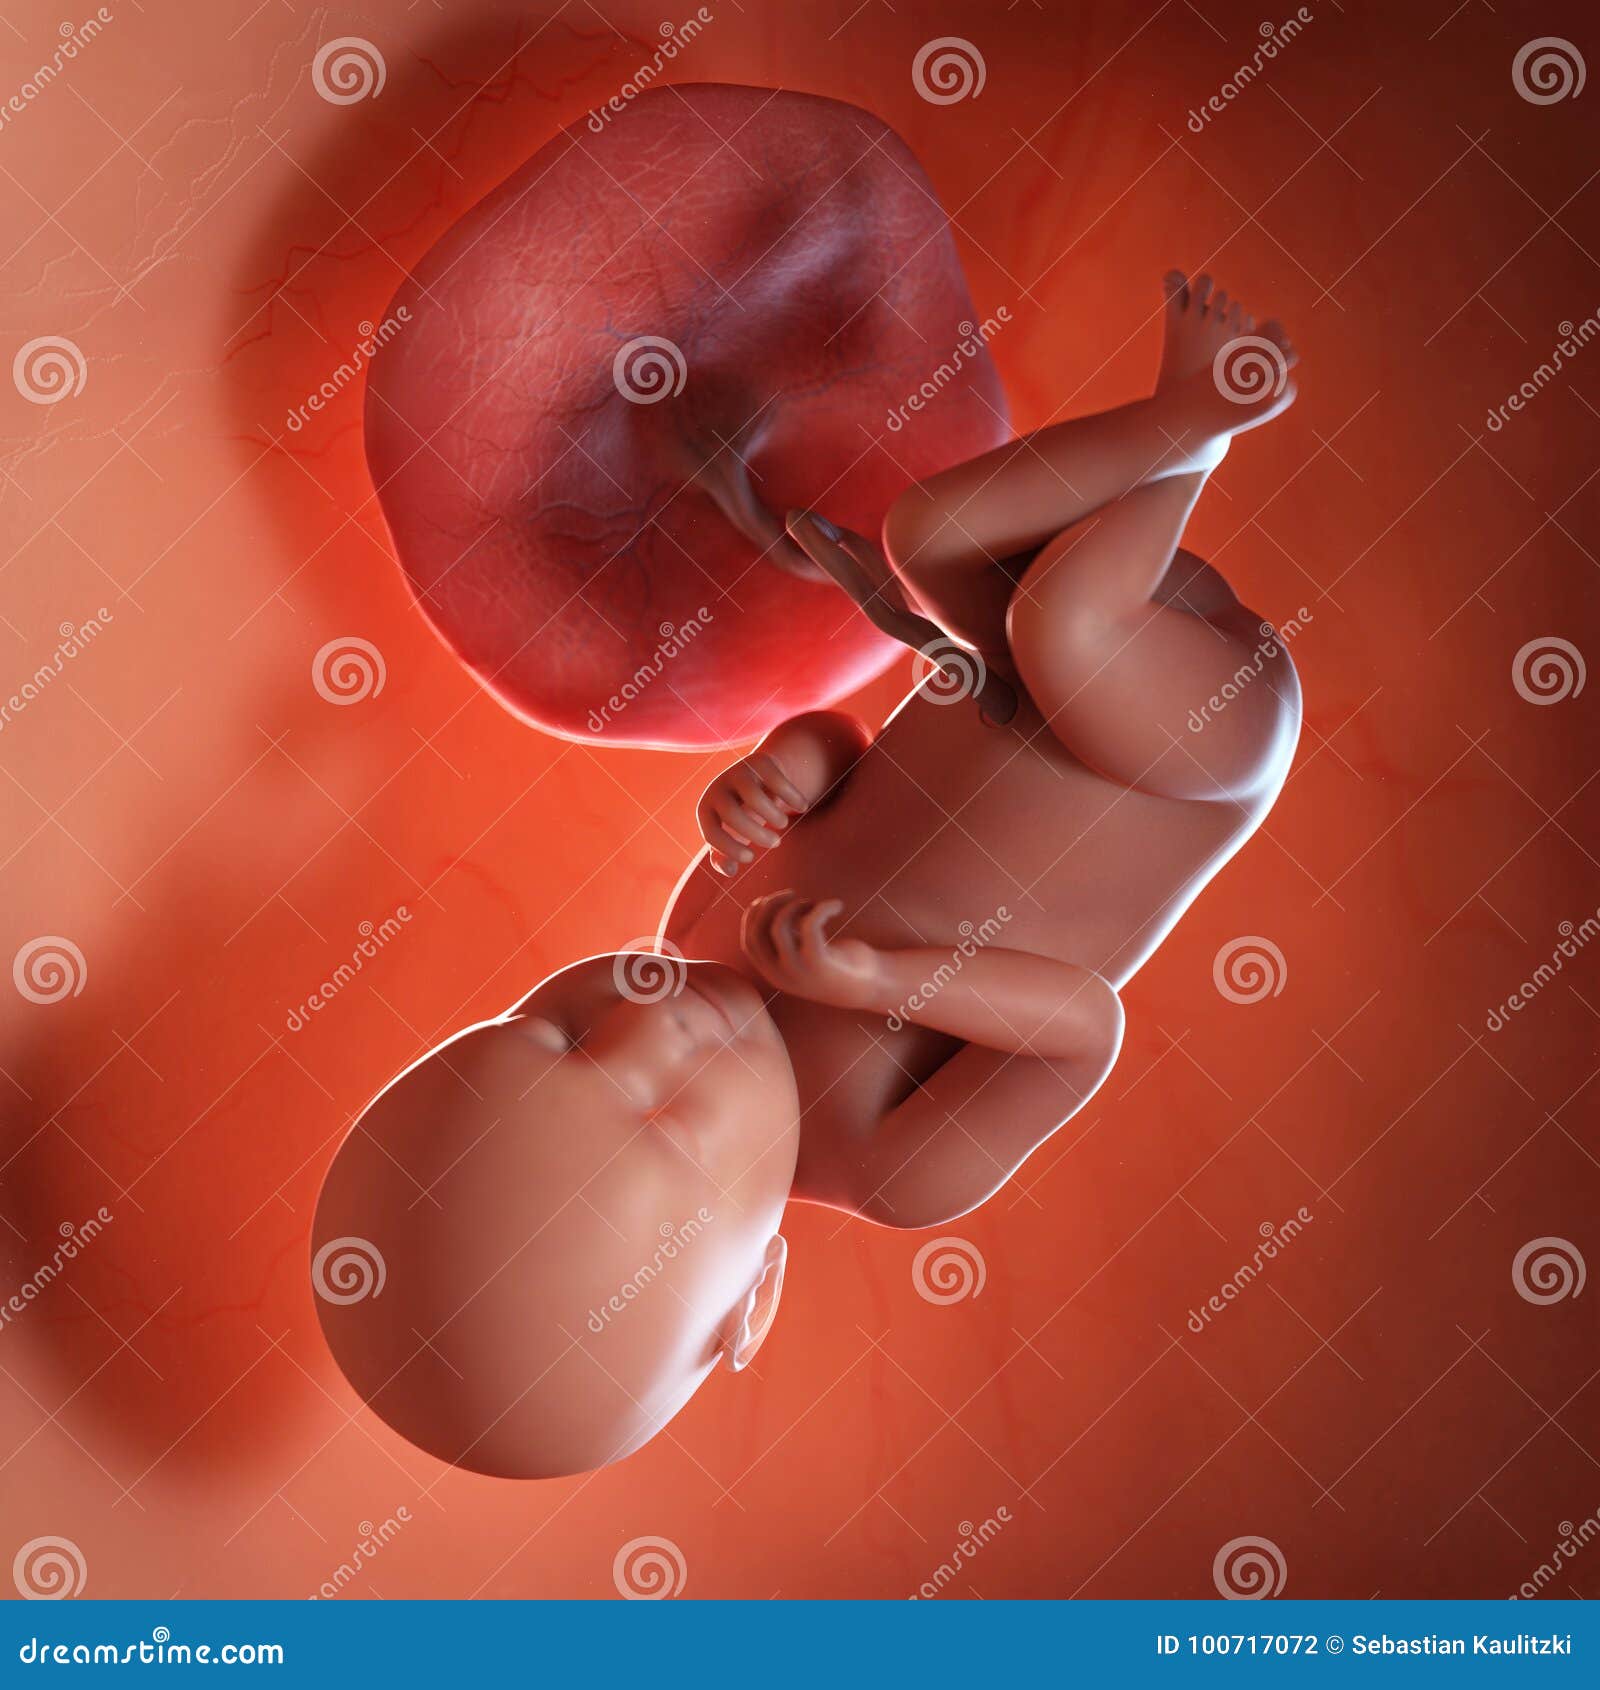 a fetus week 39